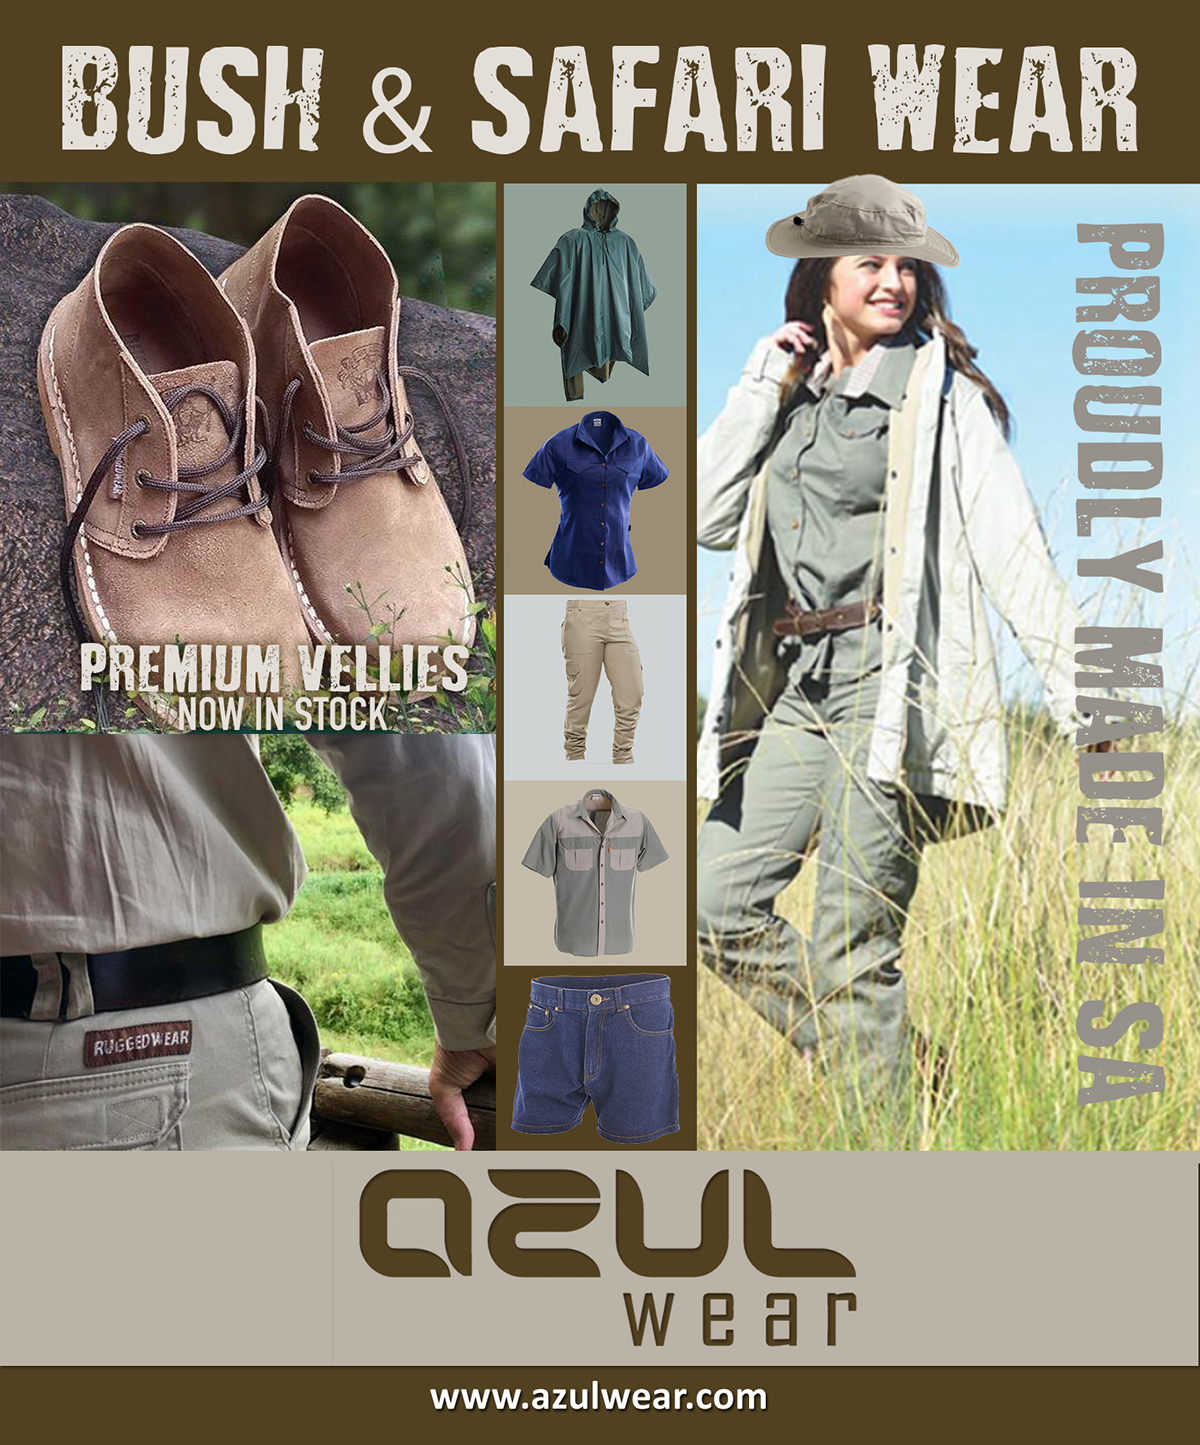 BUSH & SAFARI WEAR - Azulwear Corporate & Workwear Clothing Suppliers, Custom Branding Uniforms & Promotional Gifts